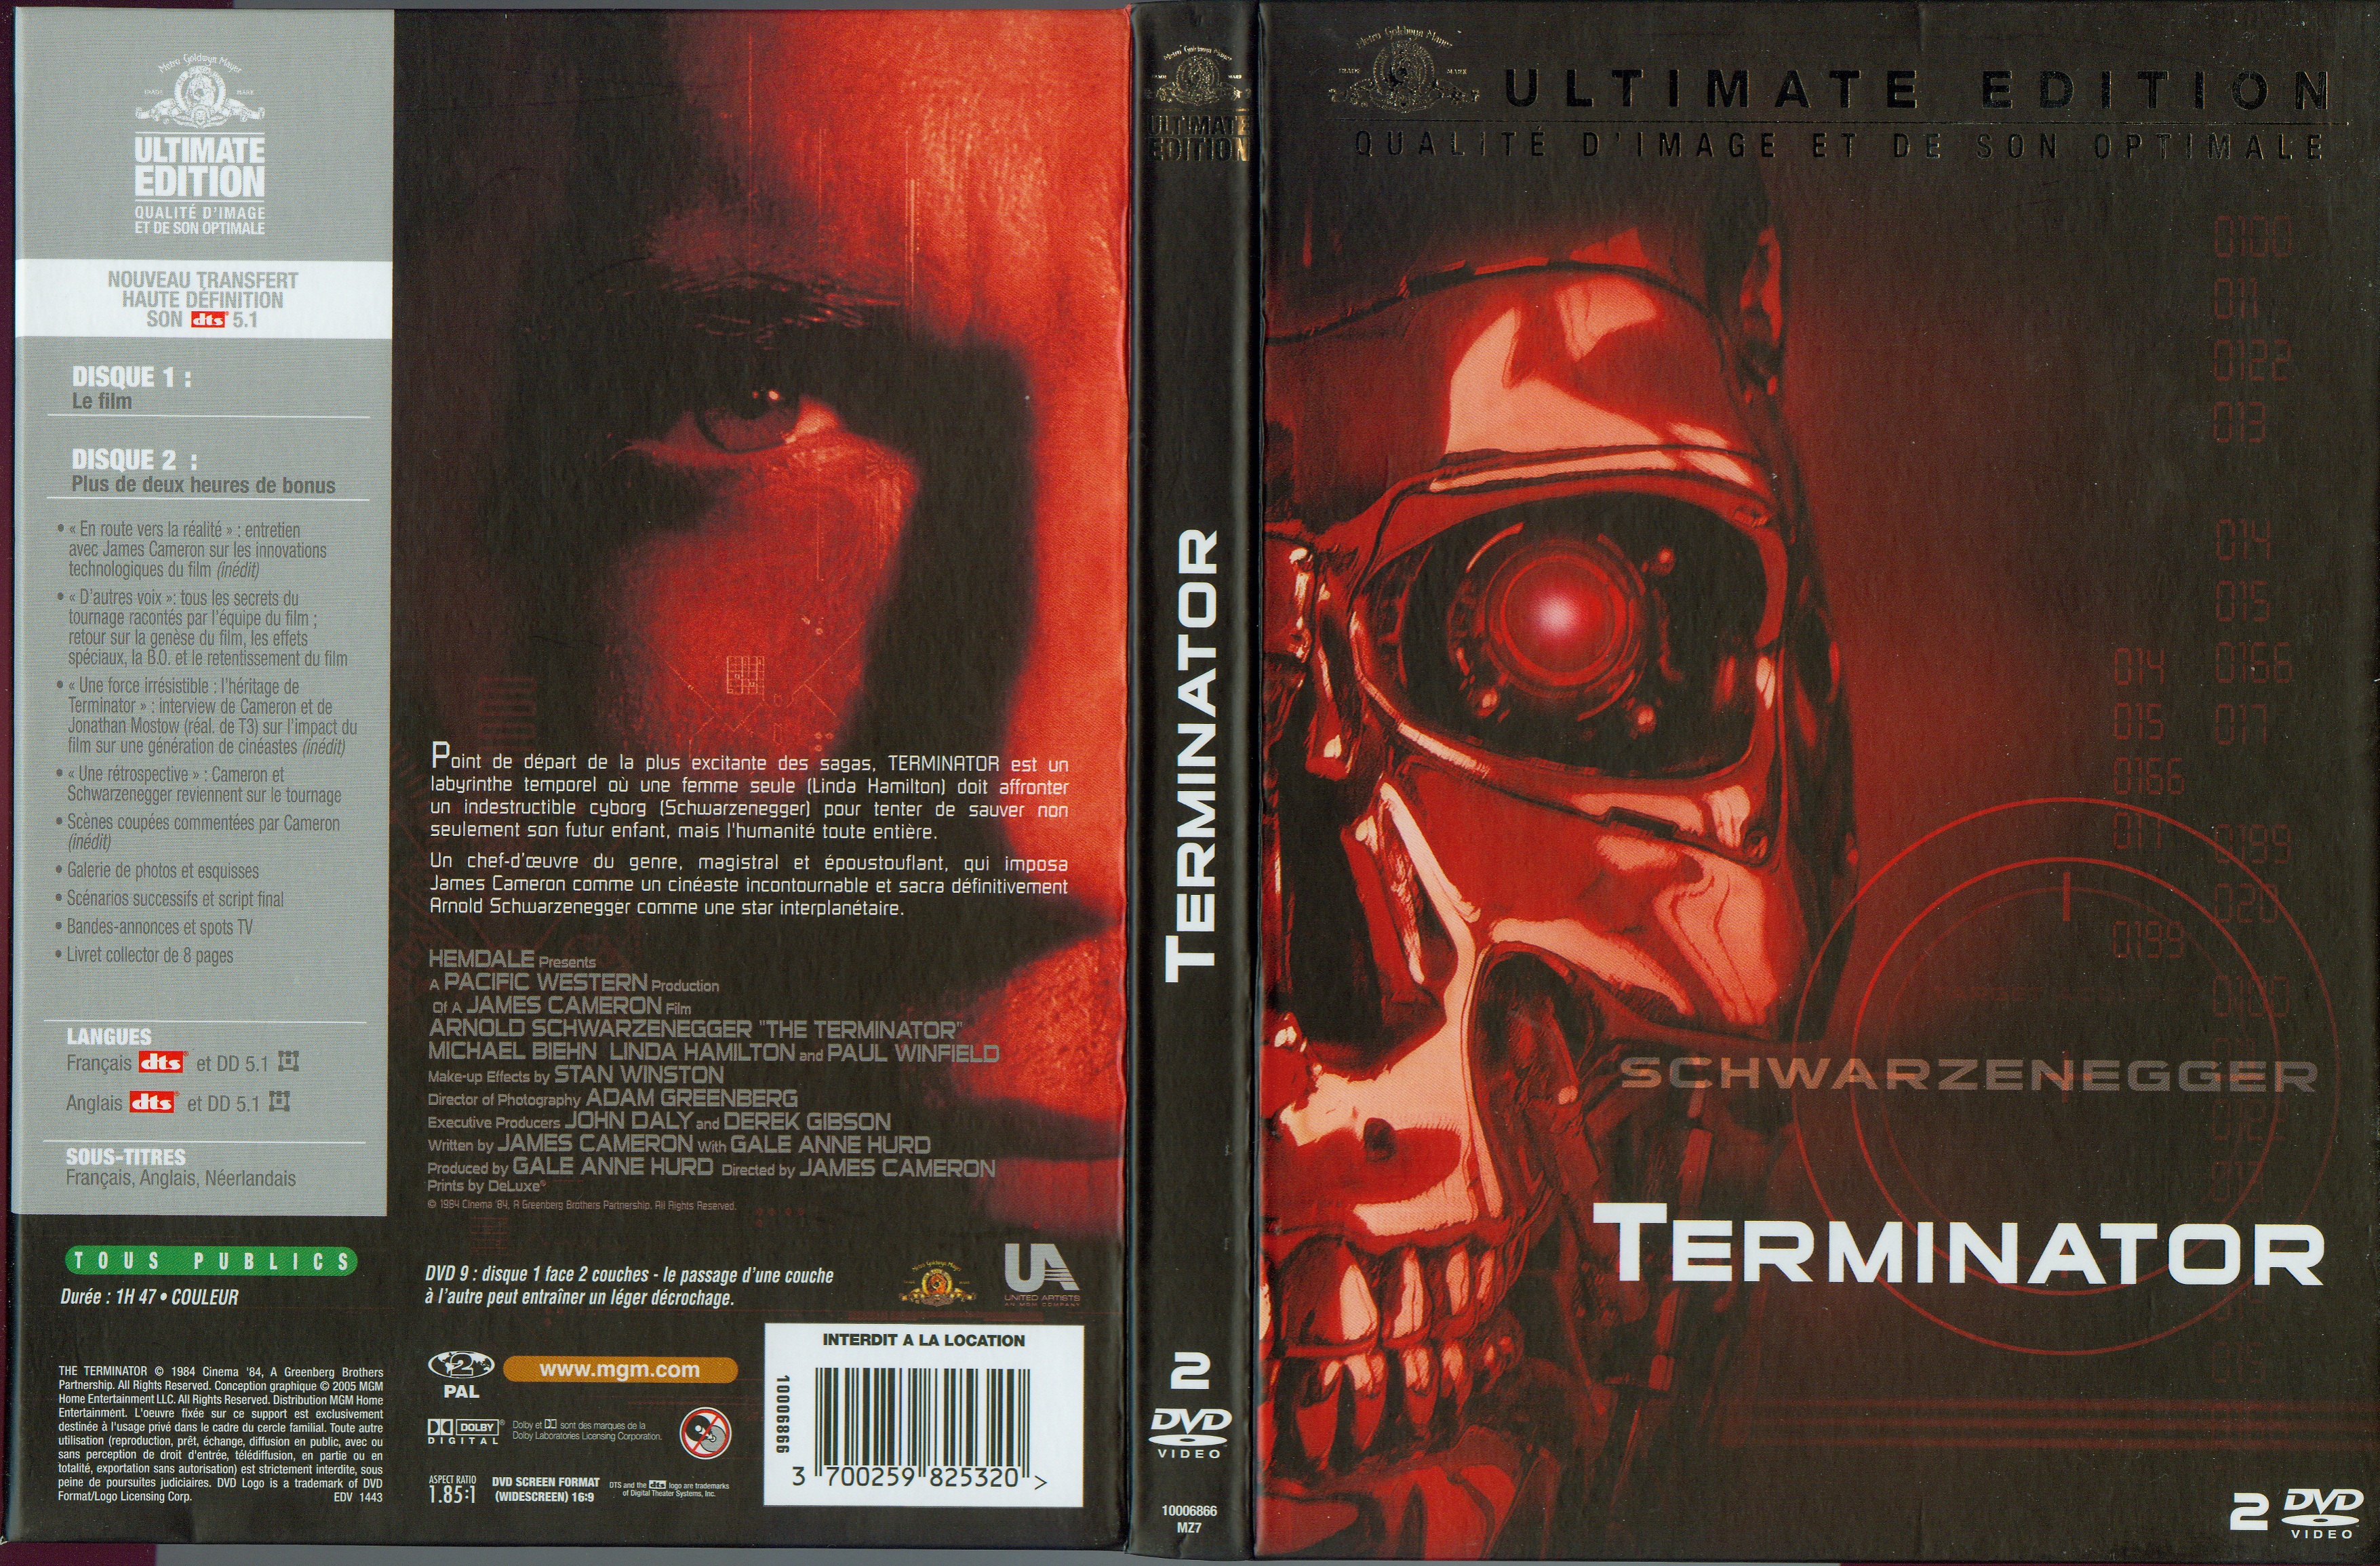 Jaquette DVD Terminator v2